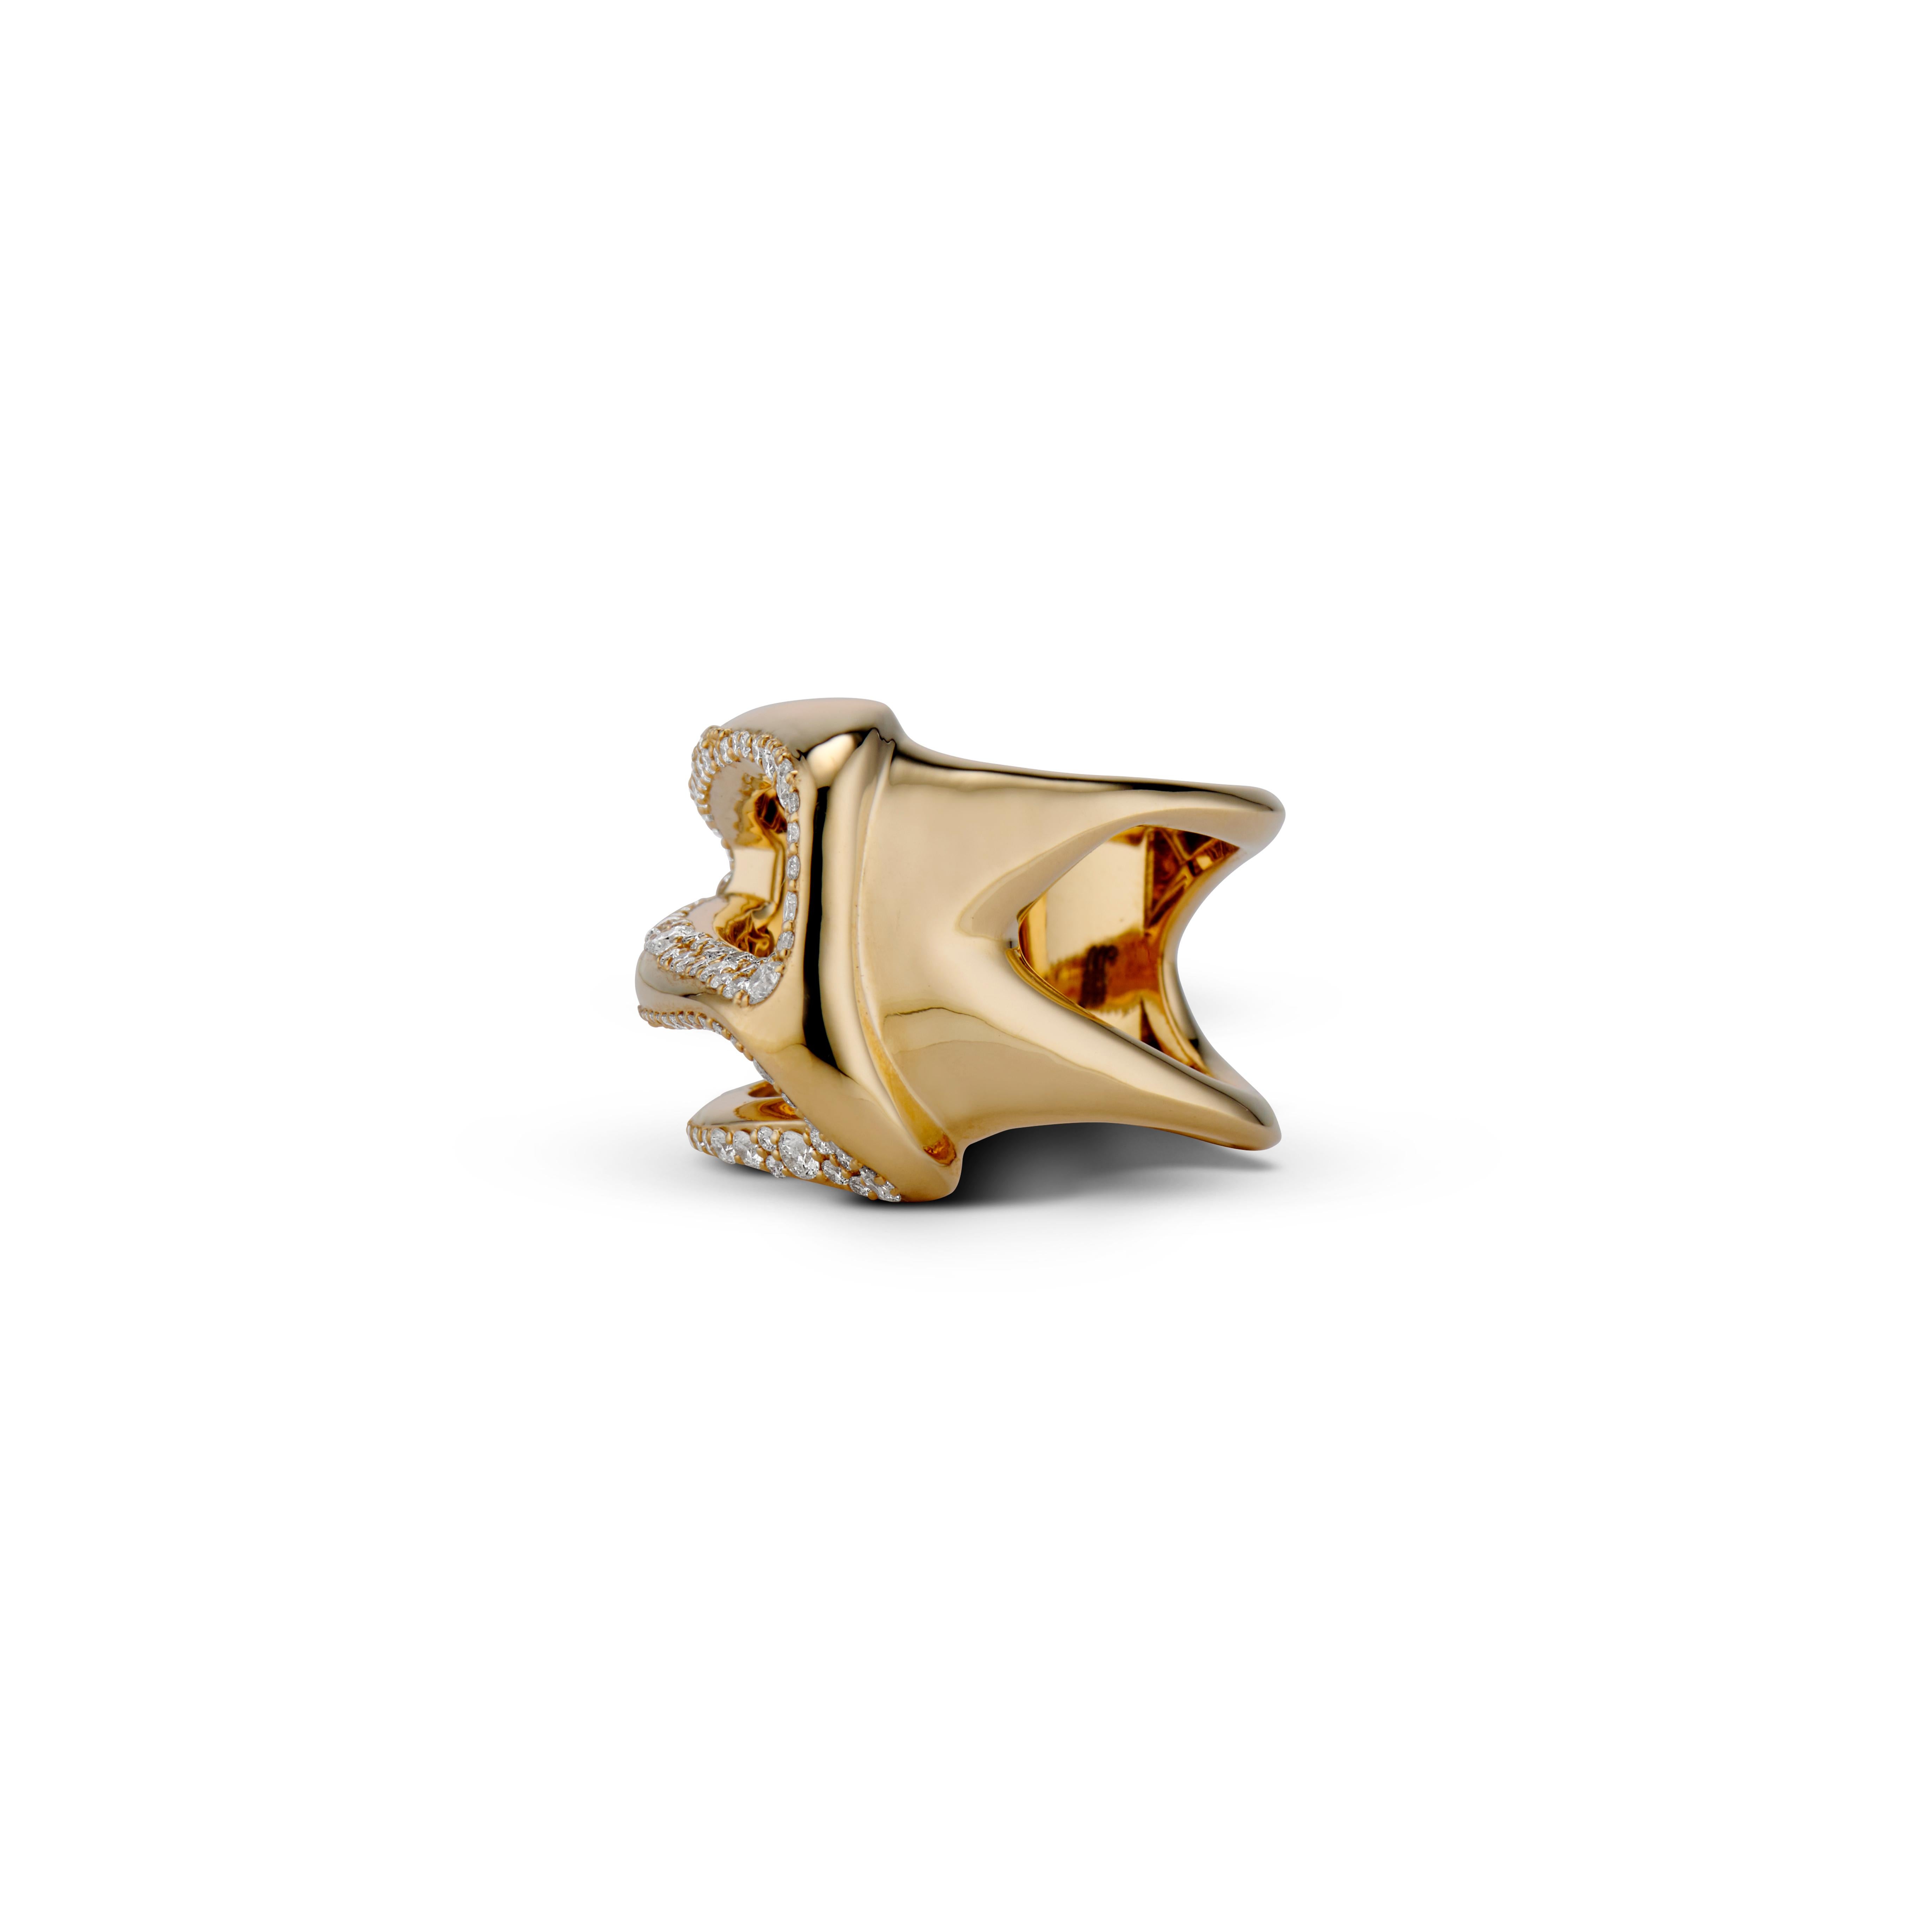 JV Insardi 18 Karat Gold Sculptural Ring with White Diamonds 3